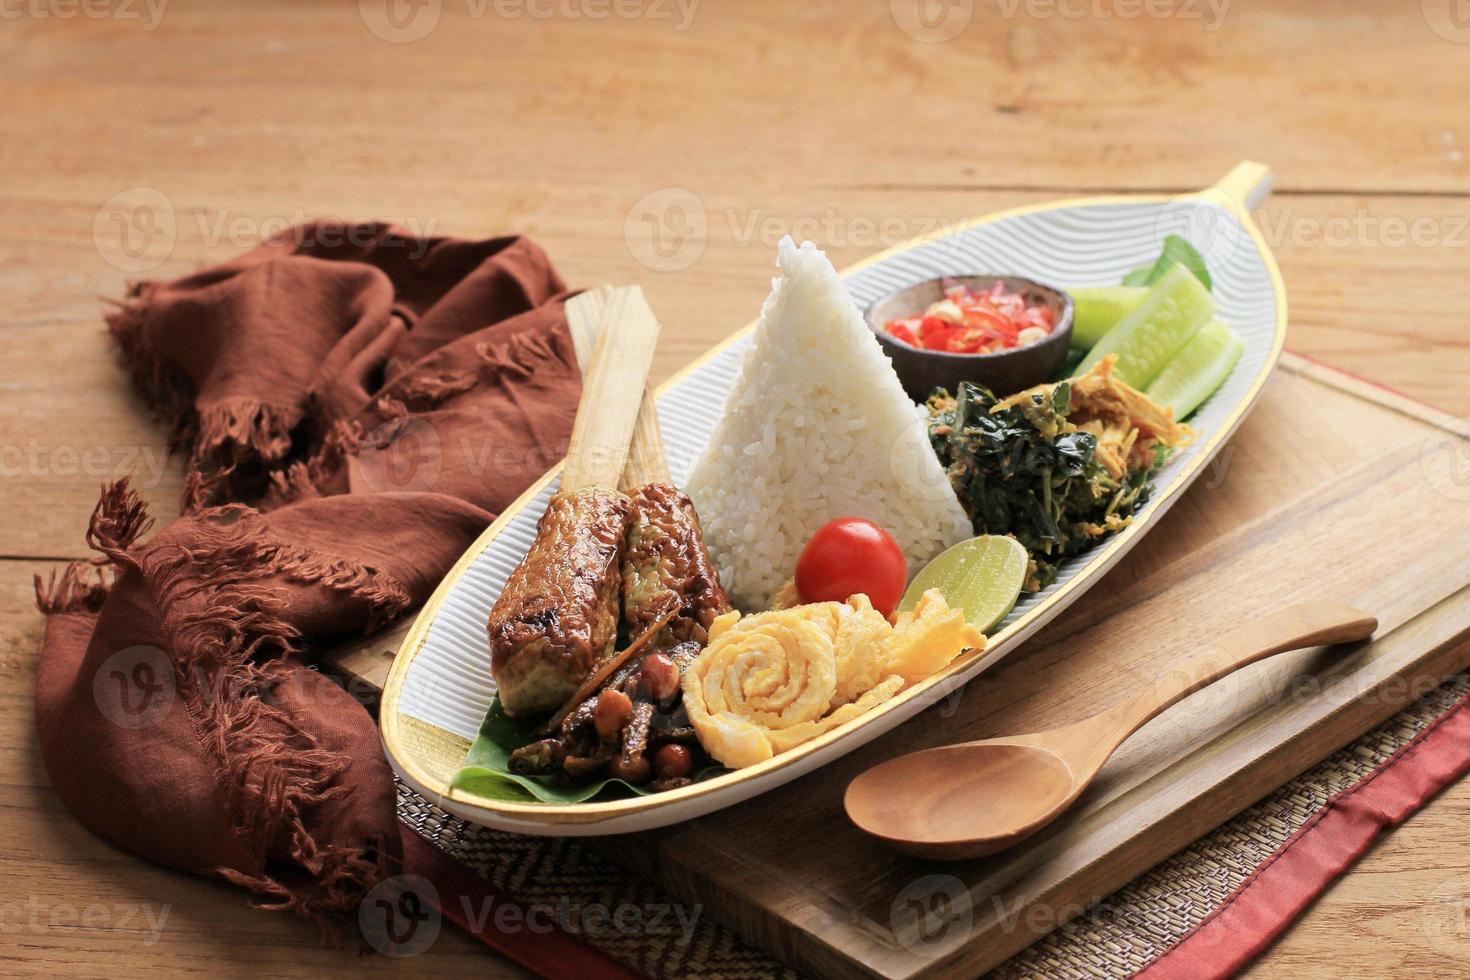 nasi campur bali. plat balinais de riz cuit à la vapeur avec une variété de plats d'accompagnement, tels que sate lilit, ayam pelalah, telur dadar, kacang teri, jukut urap. photo